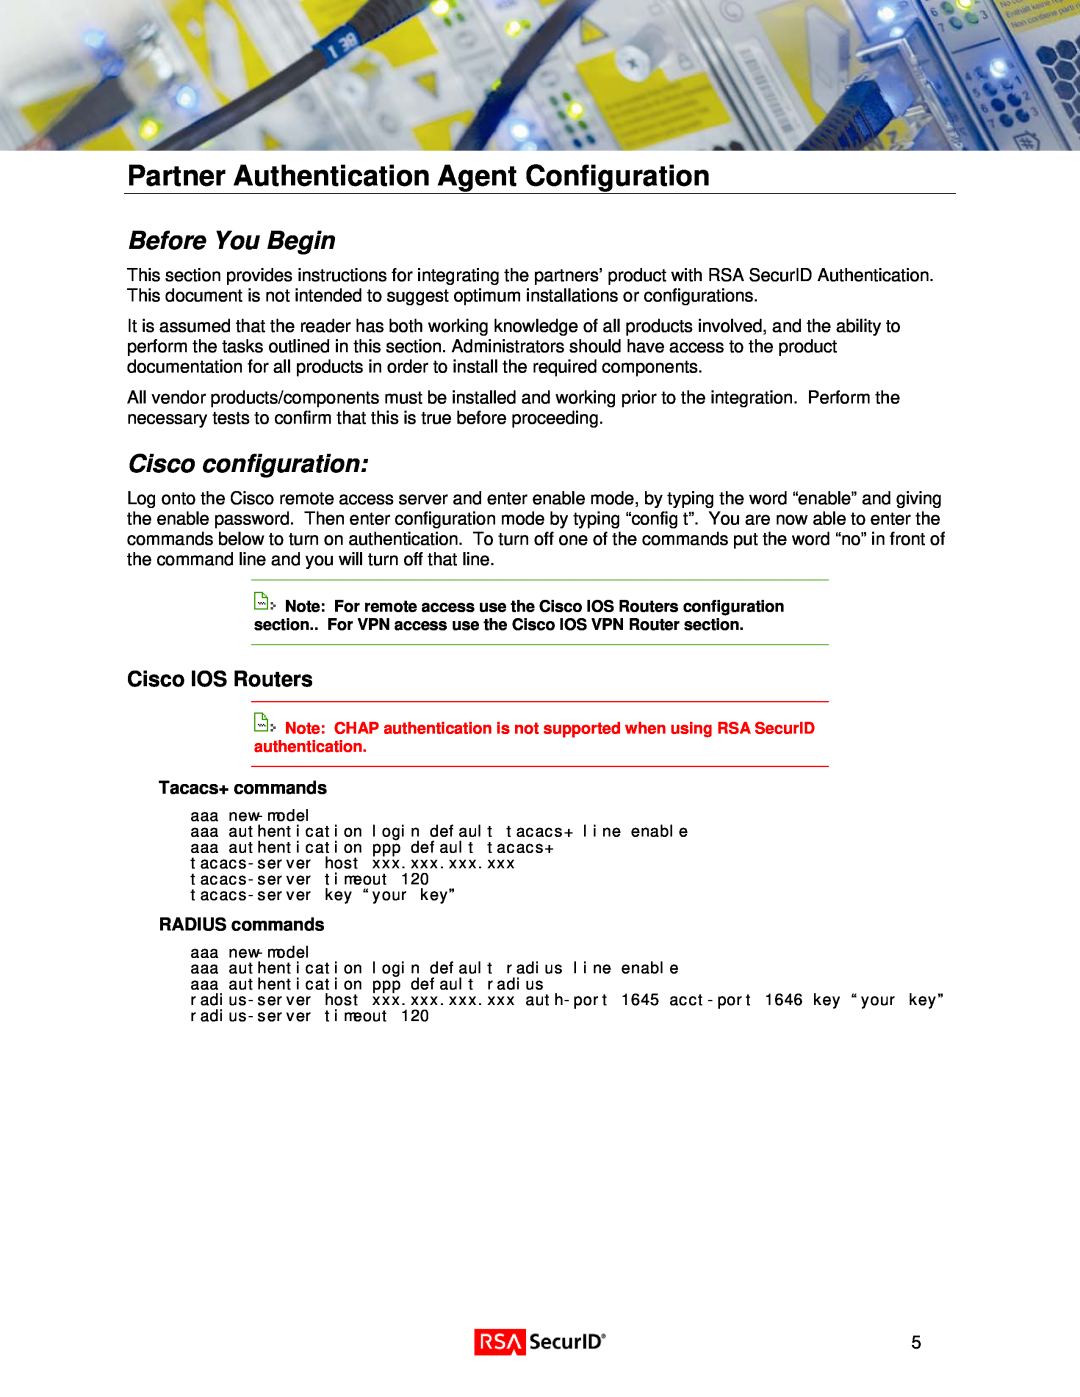 Cisco Systems Partner Authentication Agent Configuration, Cisco IOS Routers, Before You Begin, Cisco configuration 